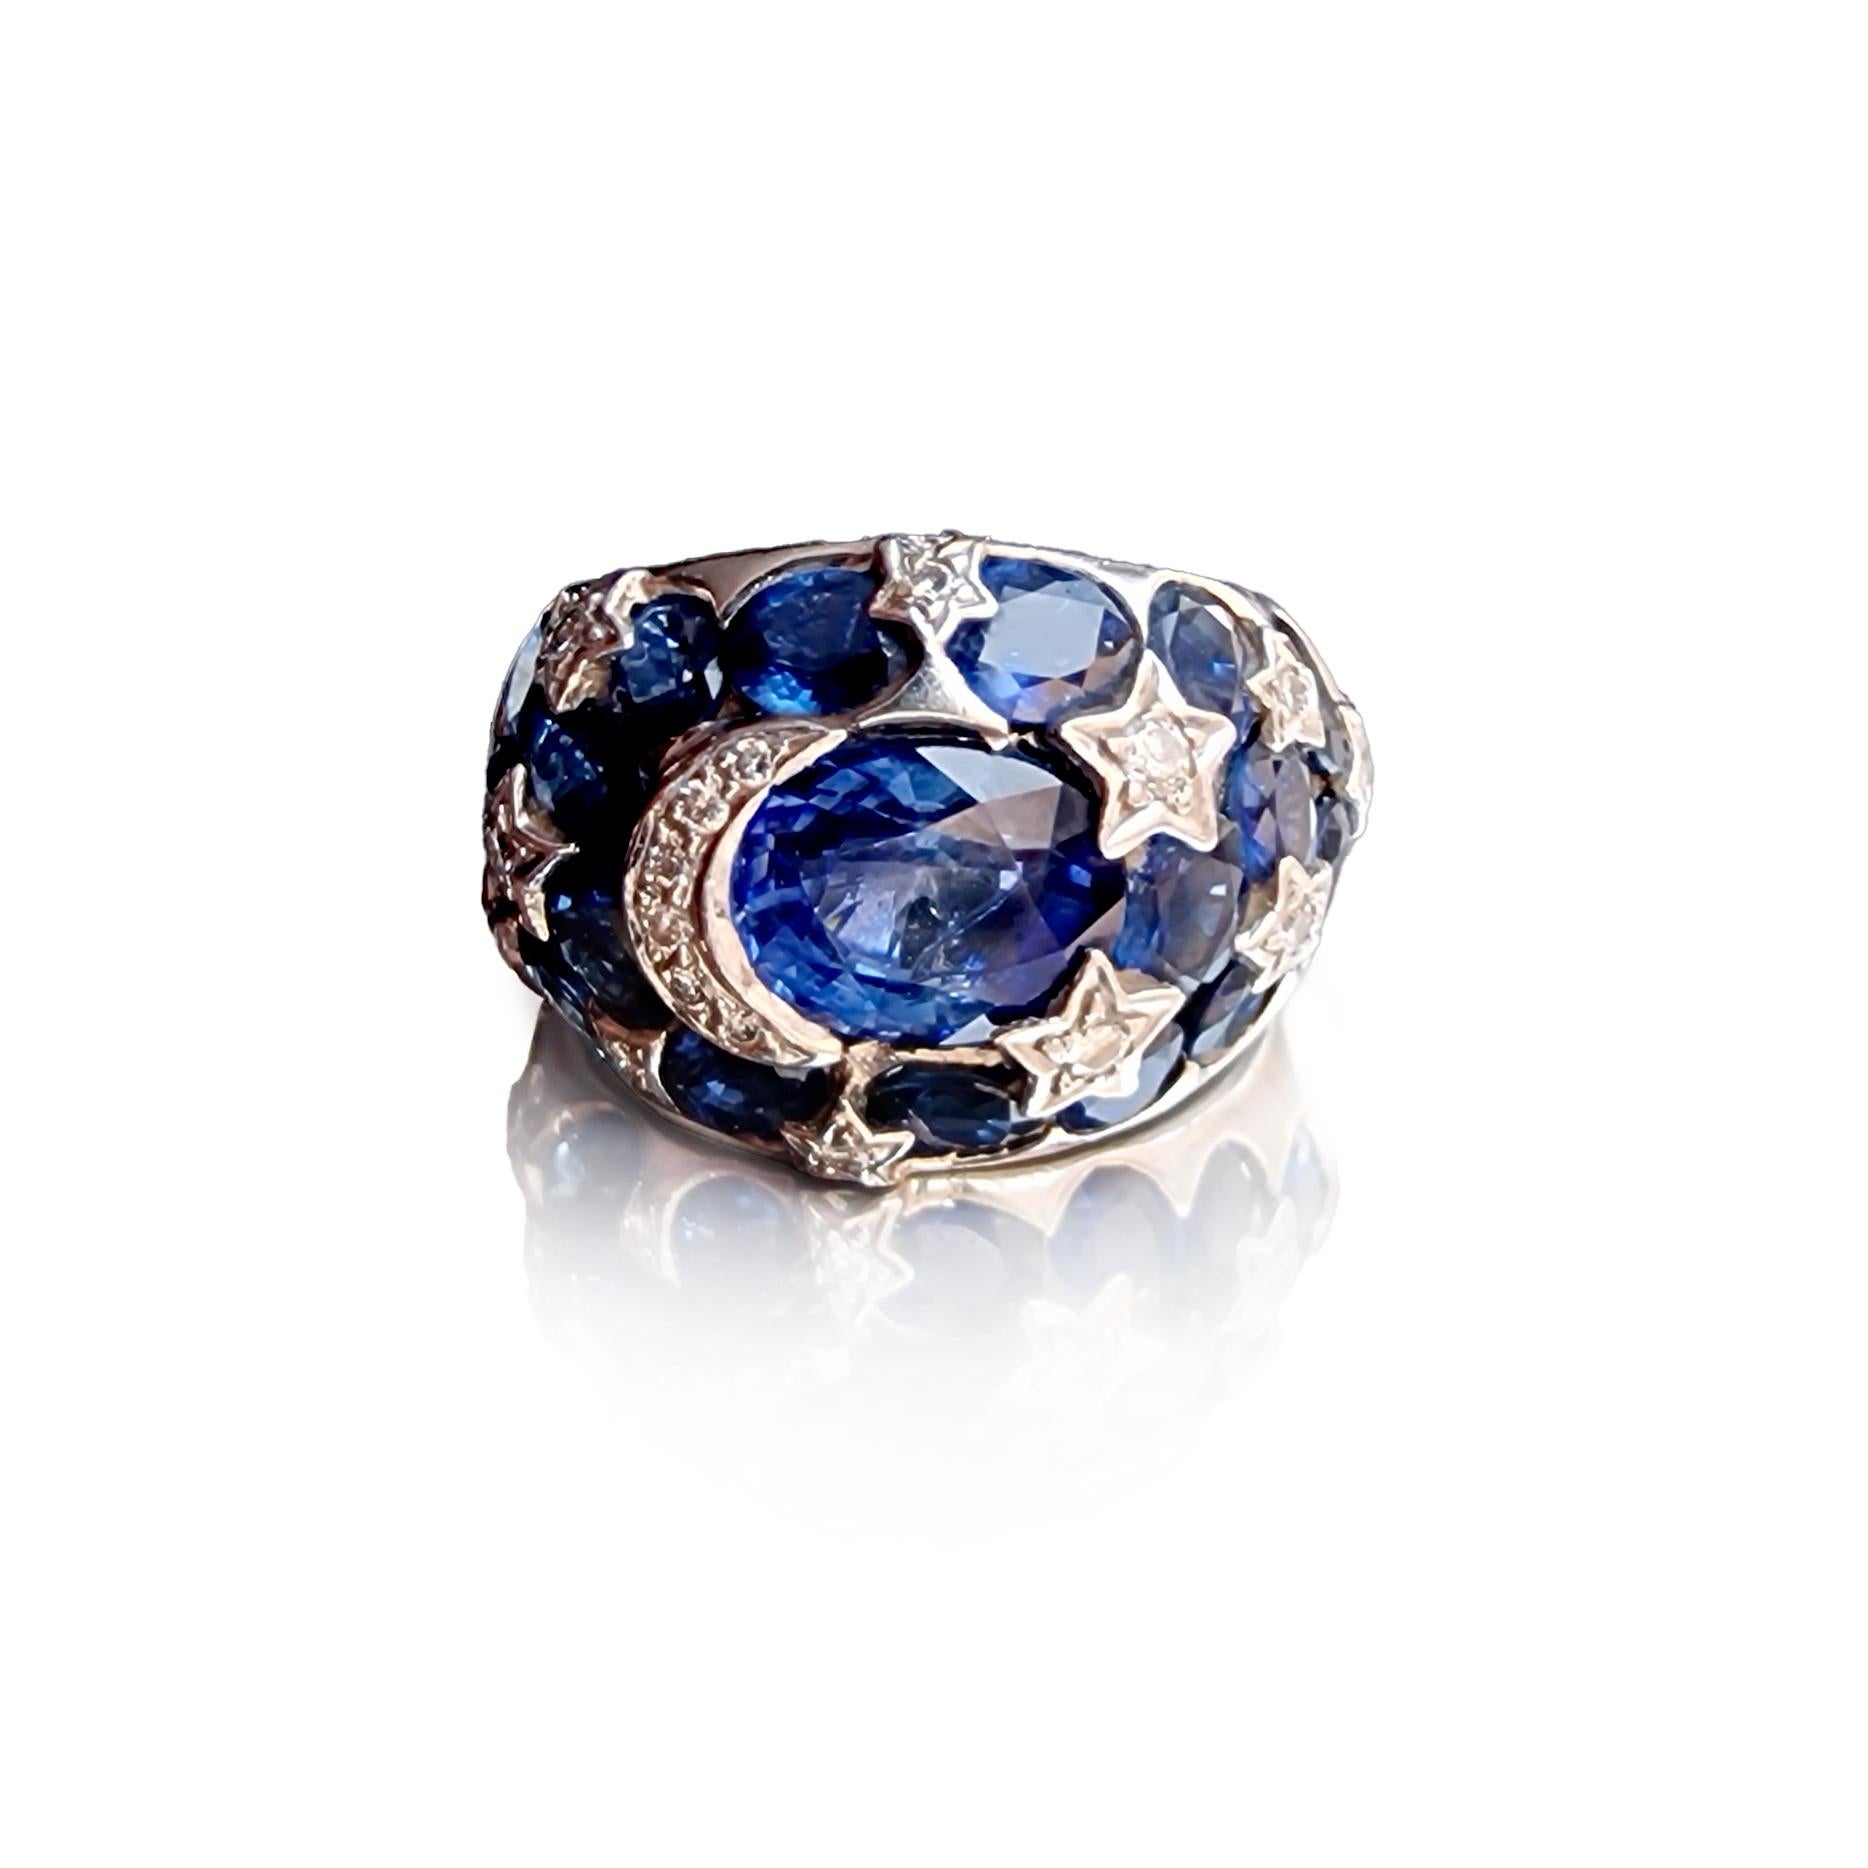 Sapphire Diamond White Gold 18K Ring.
Ring size: 6 3/4
Central Sapphire size: 9.30 x 7 x 5 mm.
18 small oval Sapphire 4.65 x 3.45 x 2.38 mm. each.